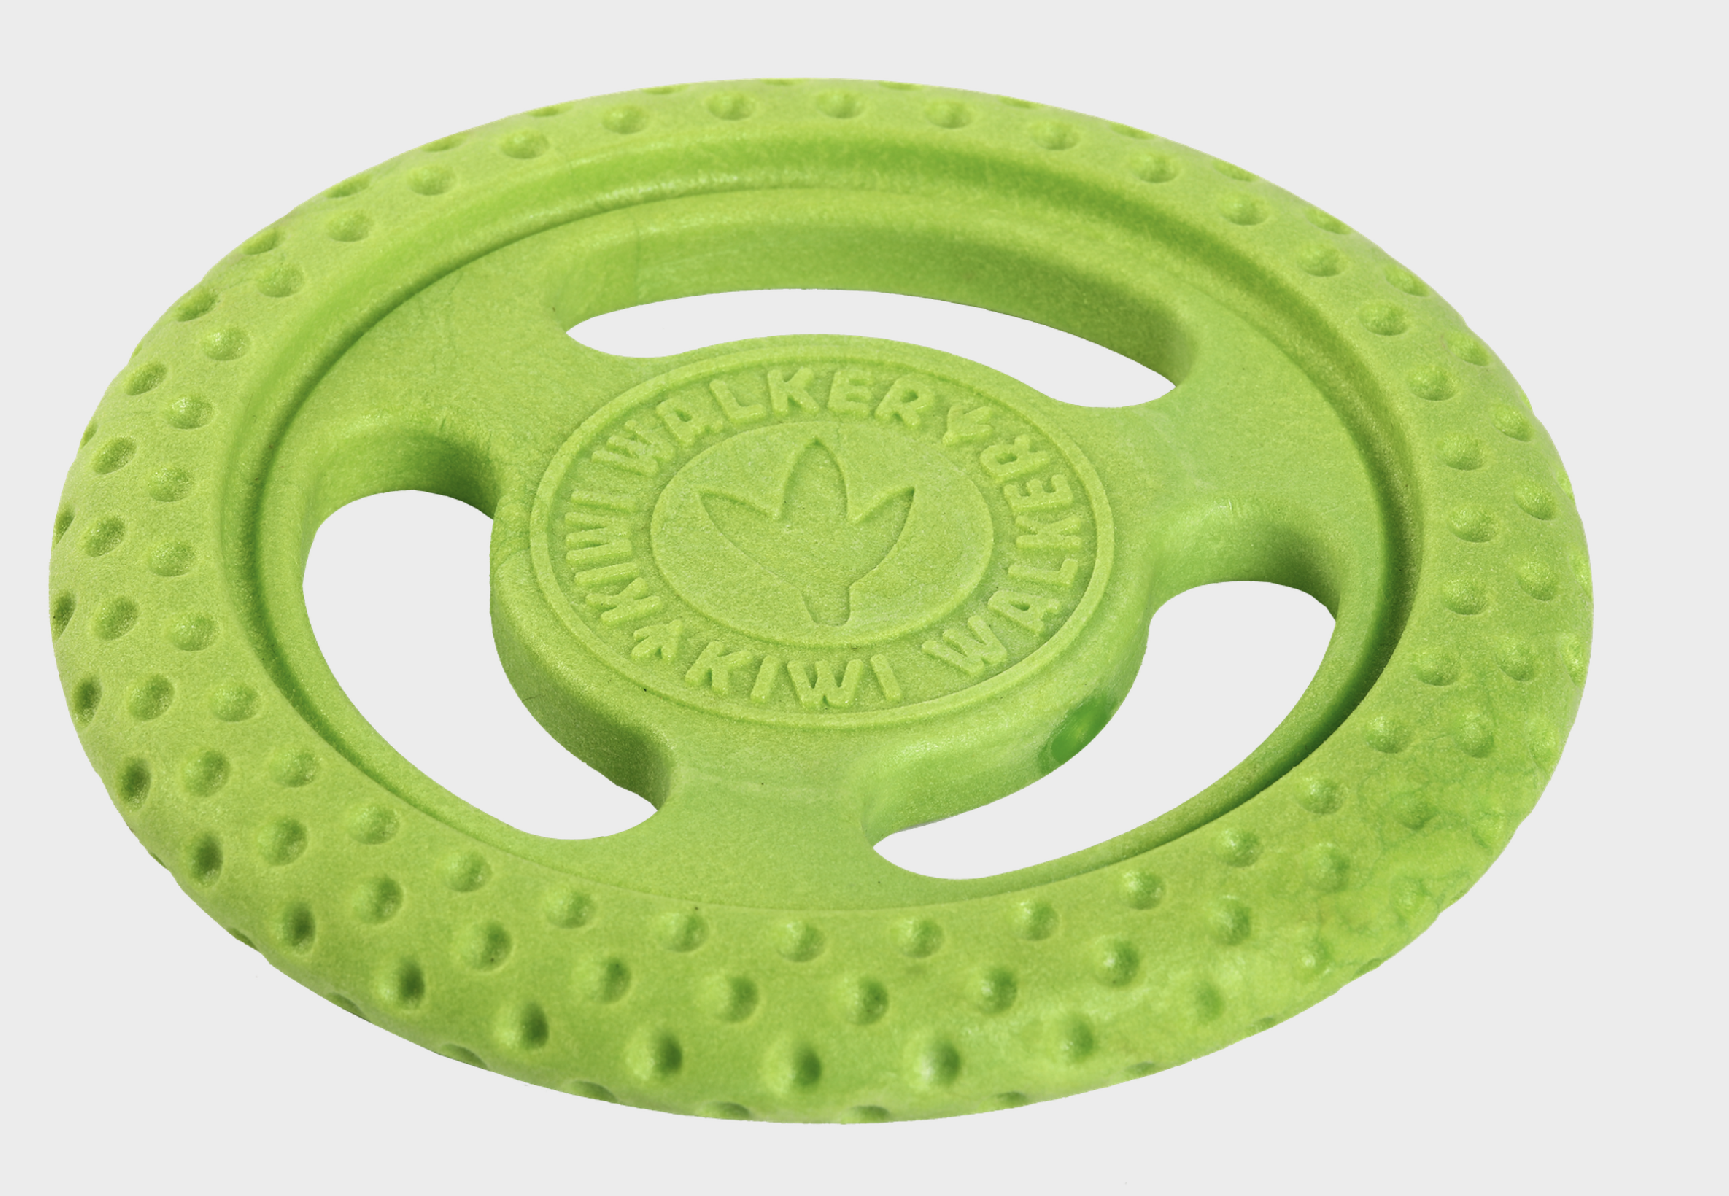 Hračka Kiwi Walker házecí/plovací frisbee z TPR gumy MAXI 22 cm Barva: Zelená